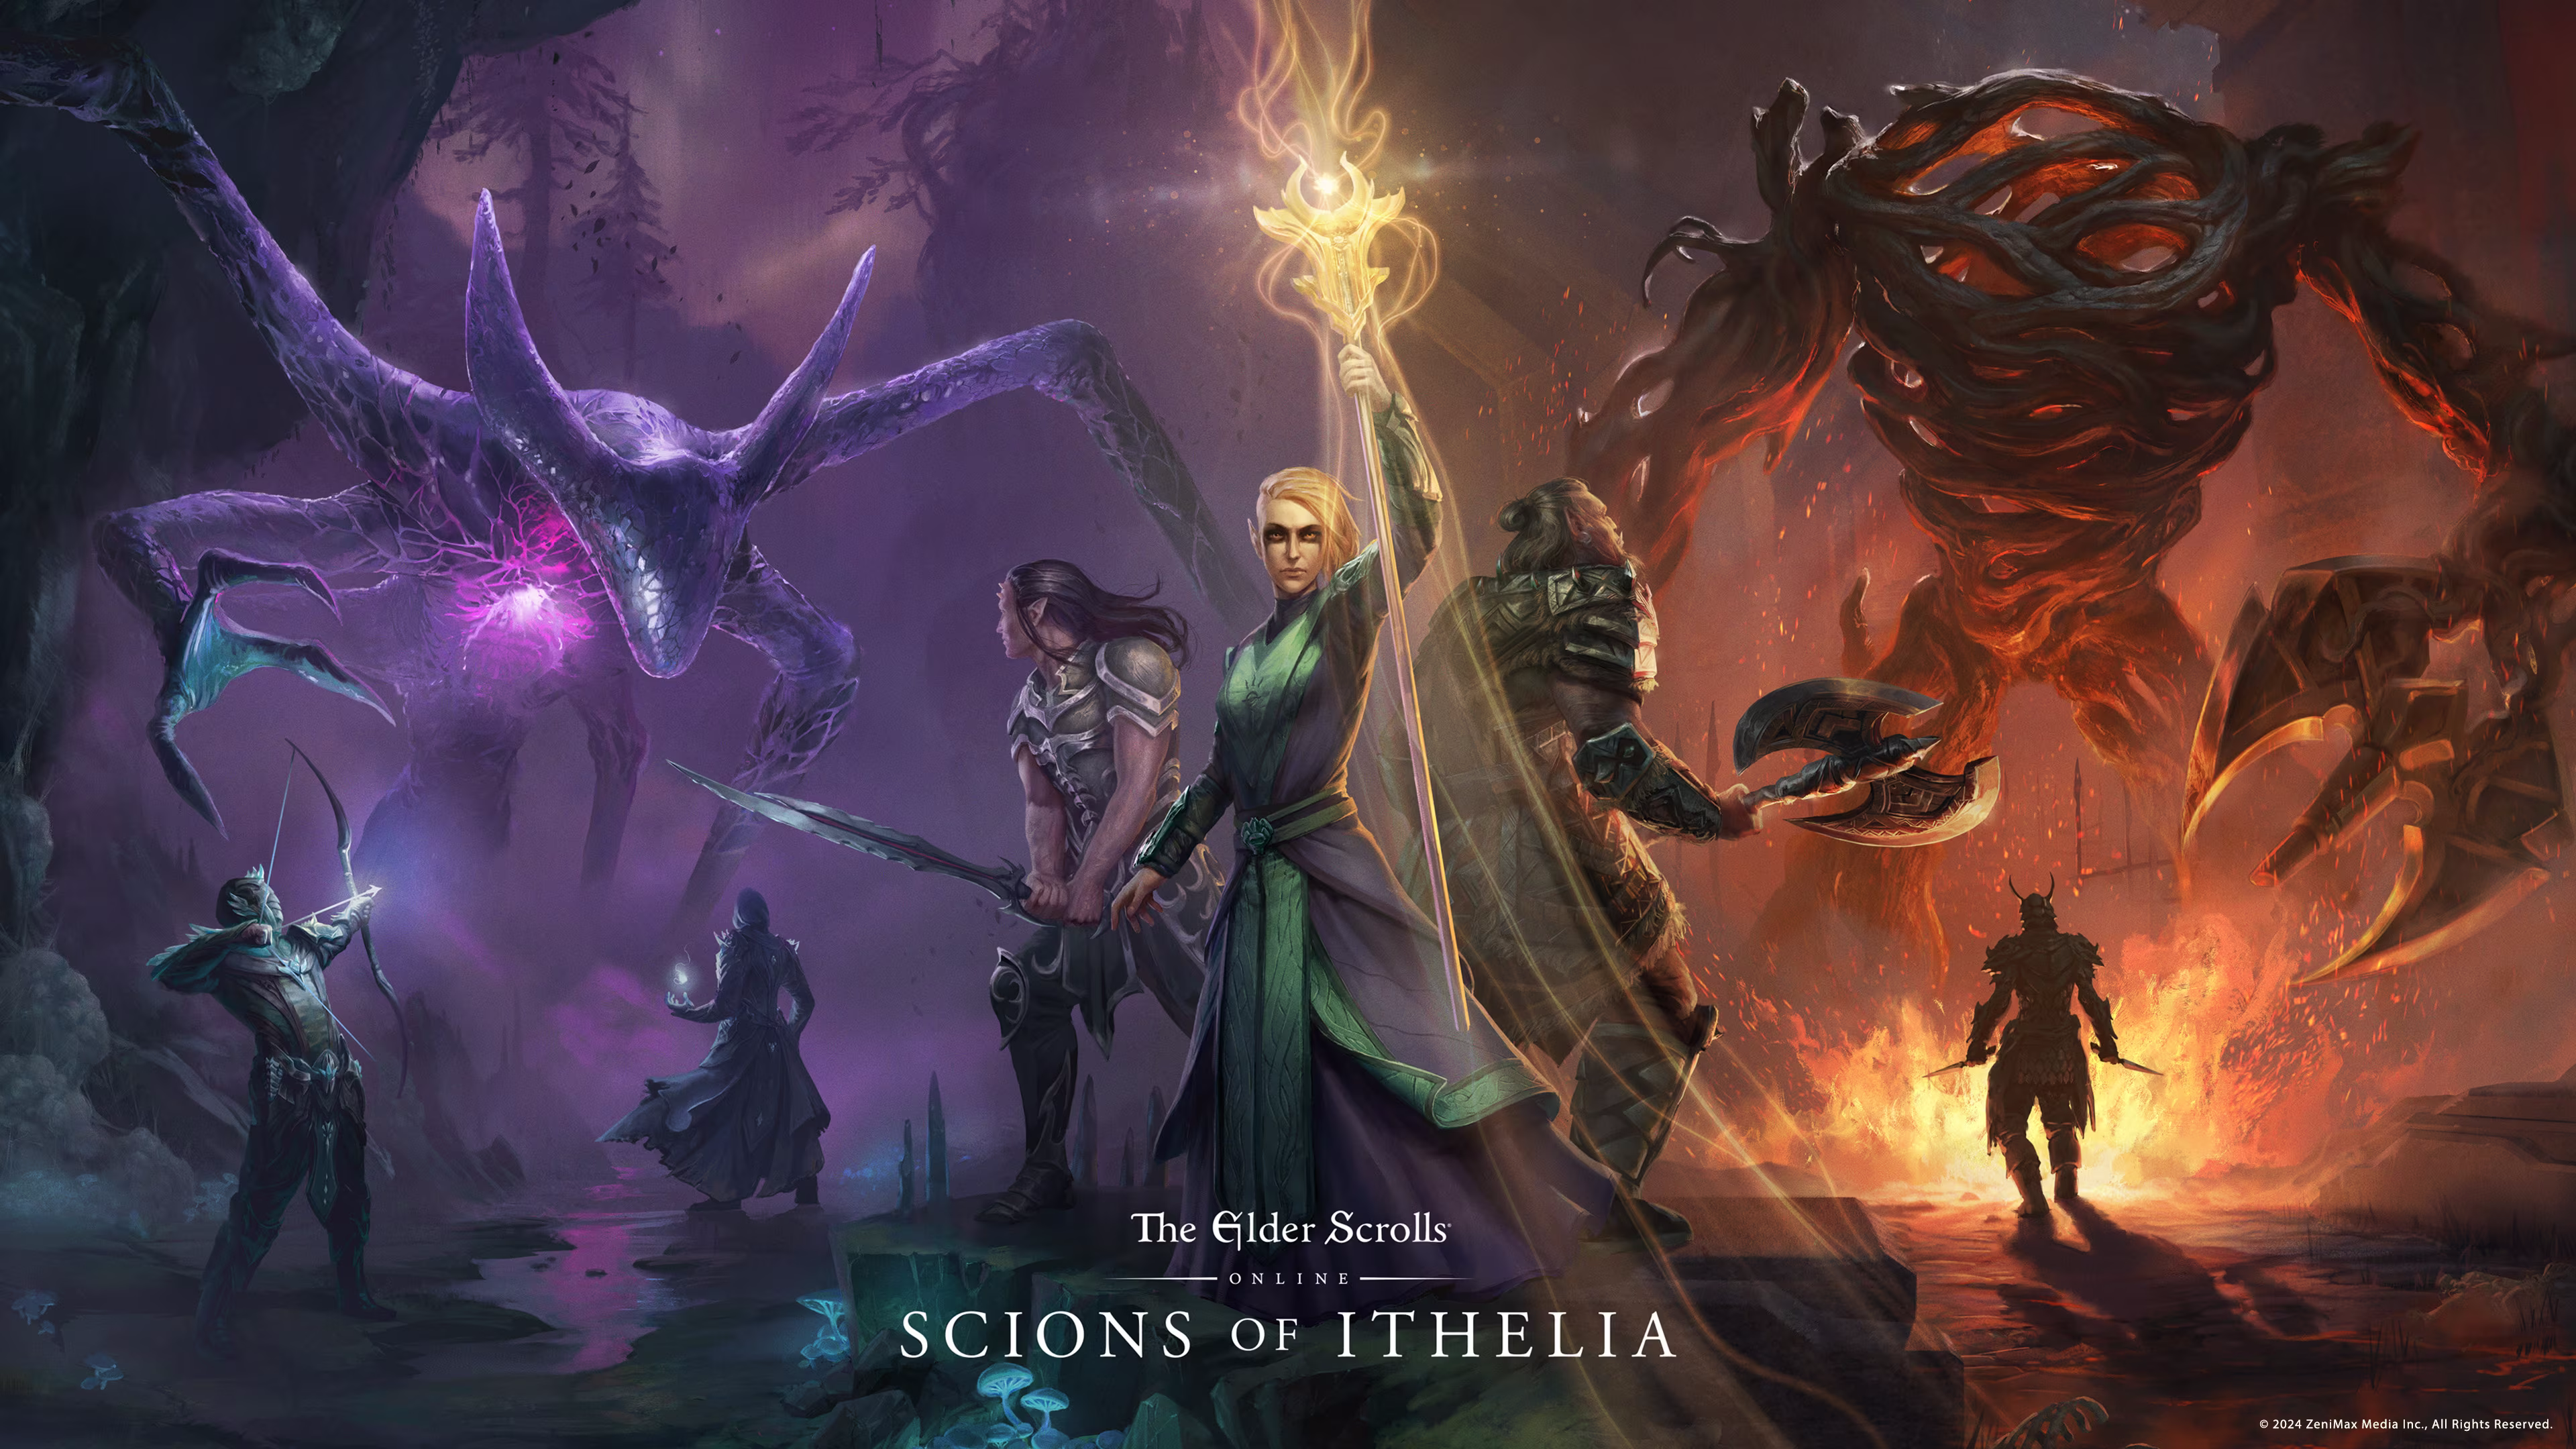 The Elder Scrolls Update 41 – Scions of Ithelia